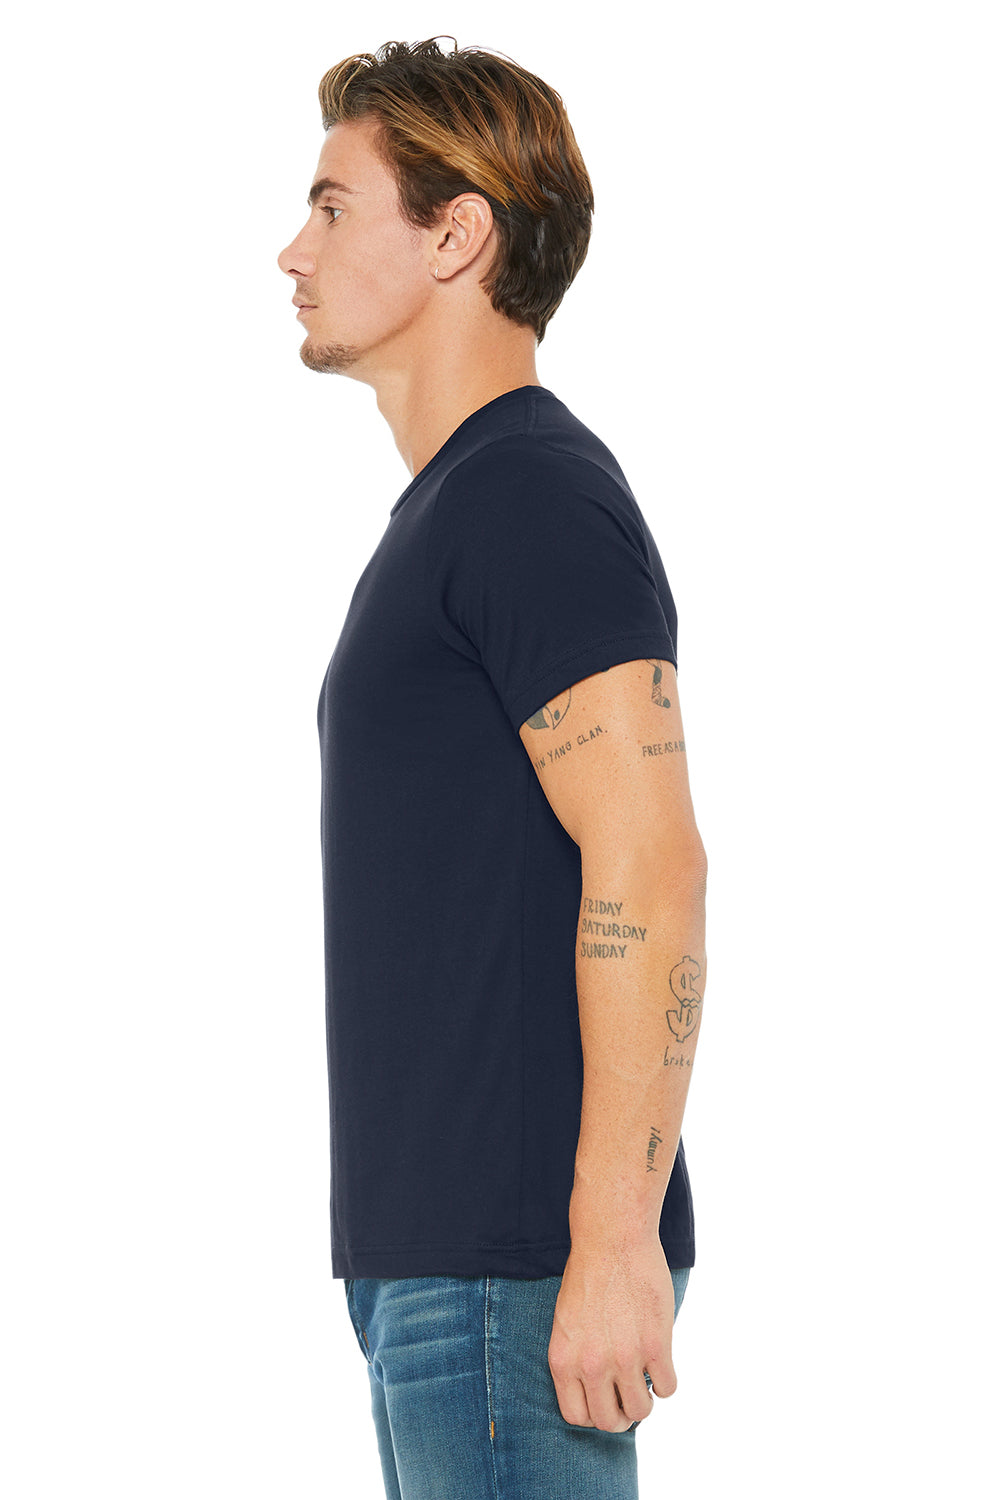 Bella + Canvas 3650 Mens Short Sleeve Crewneck T-Shirt Navy Blue Side